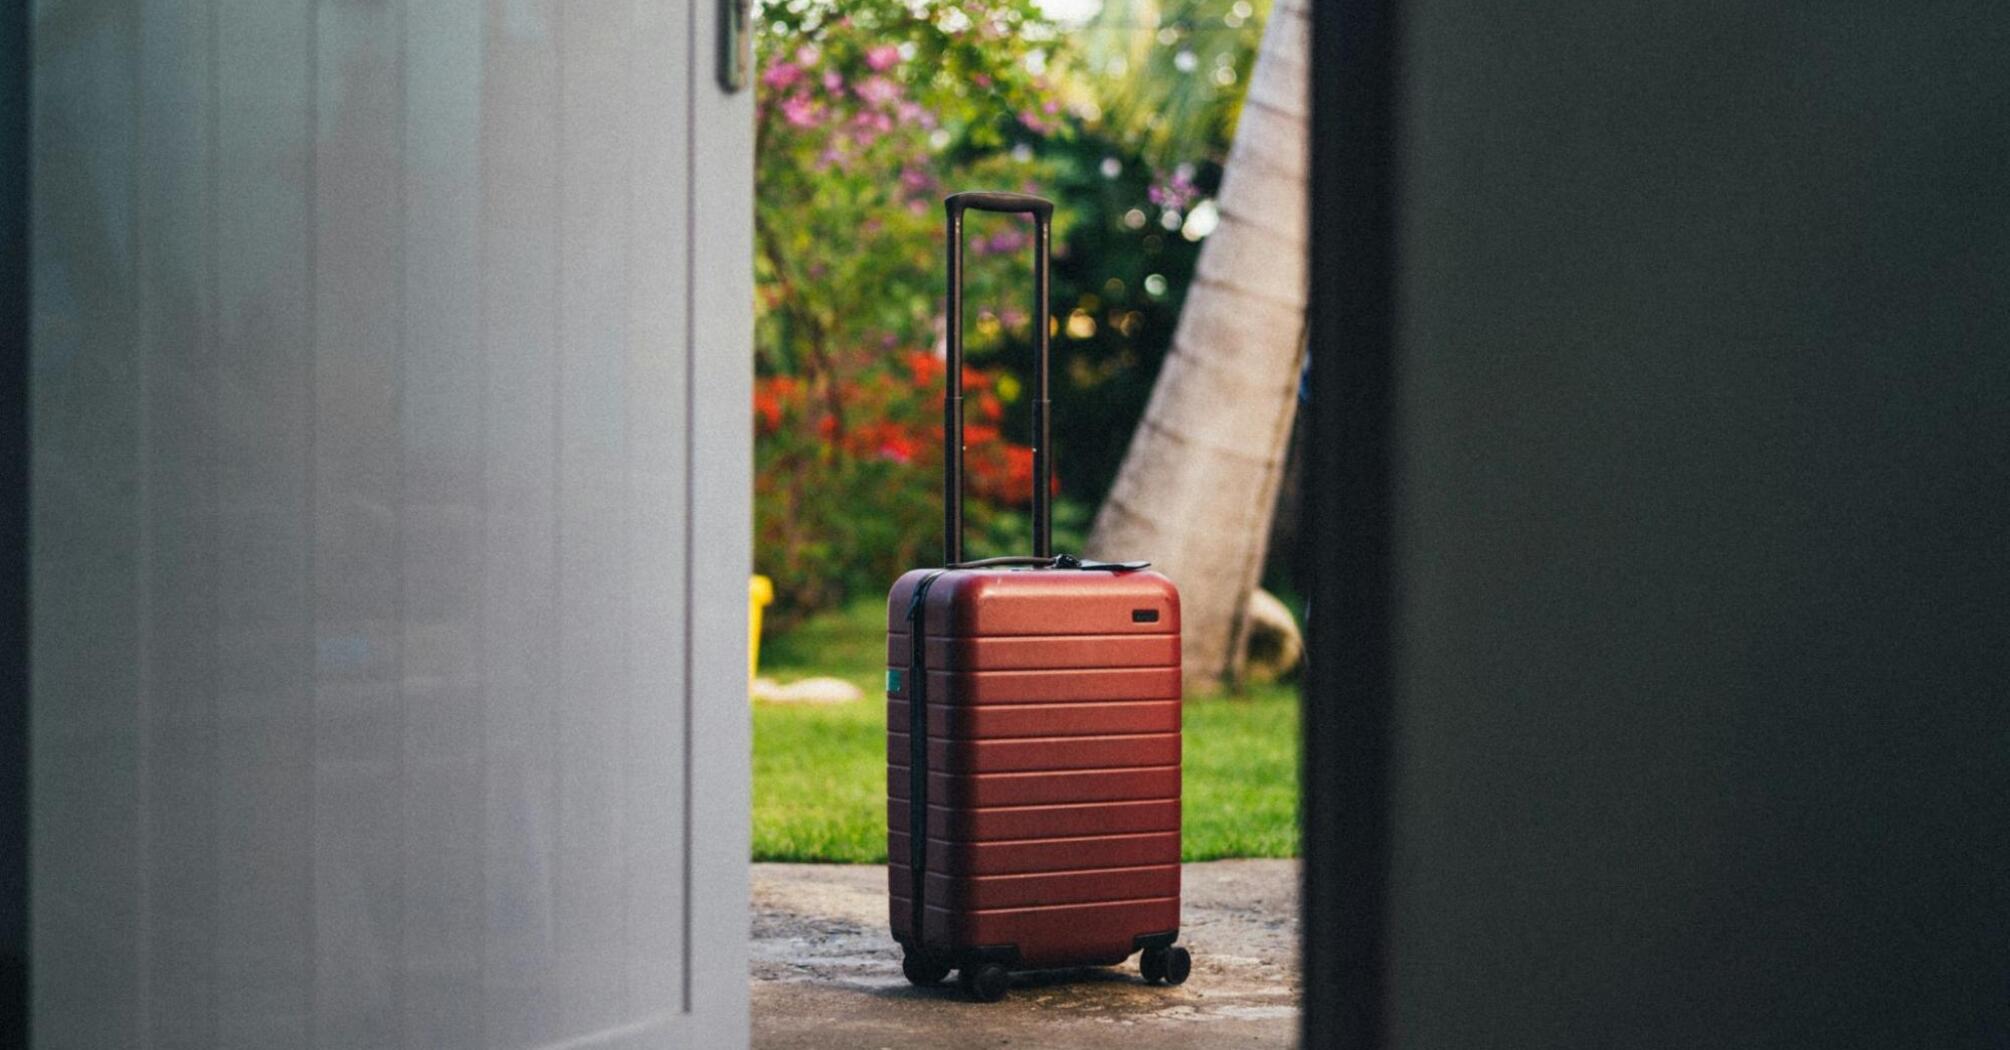 Luggage in front of the door